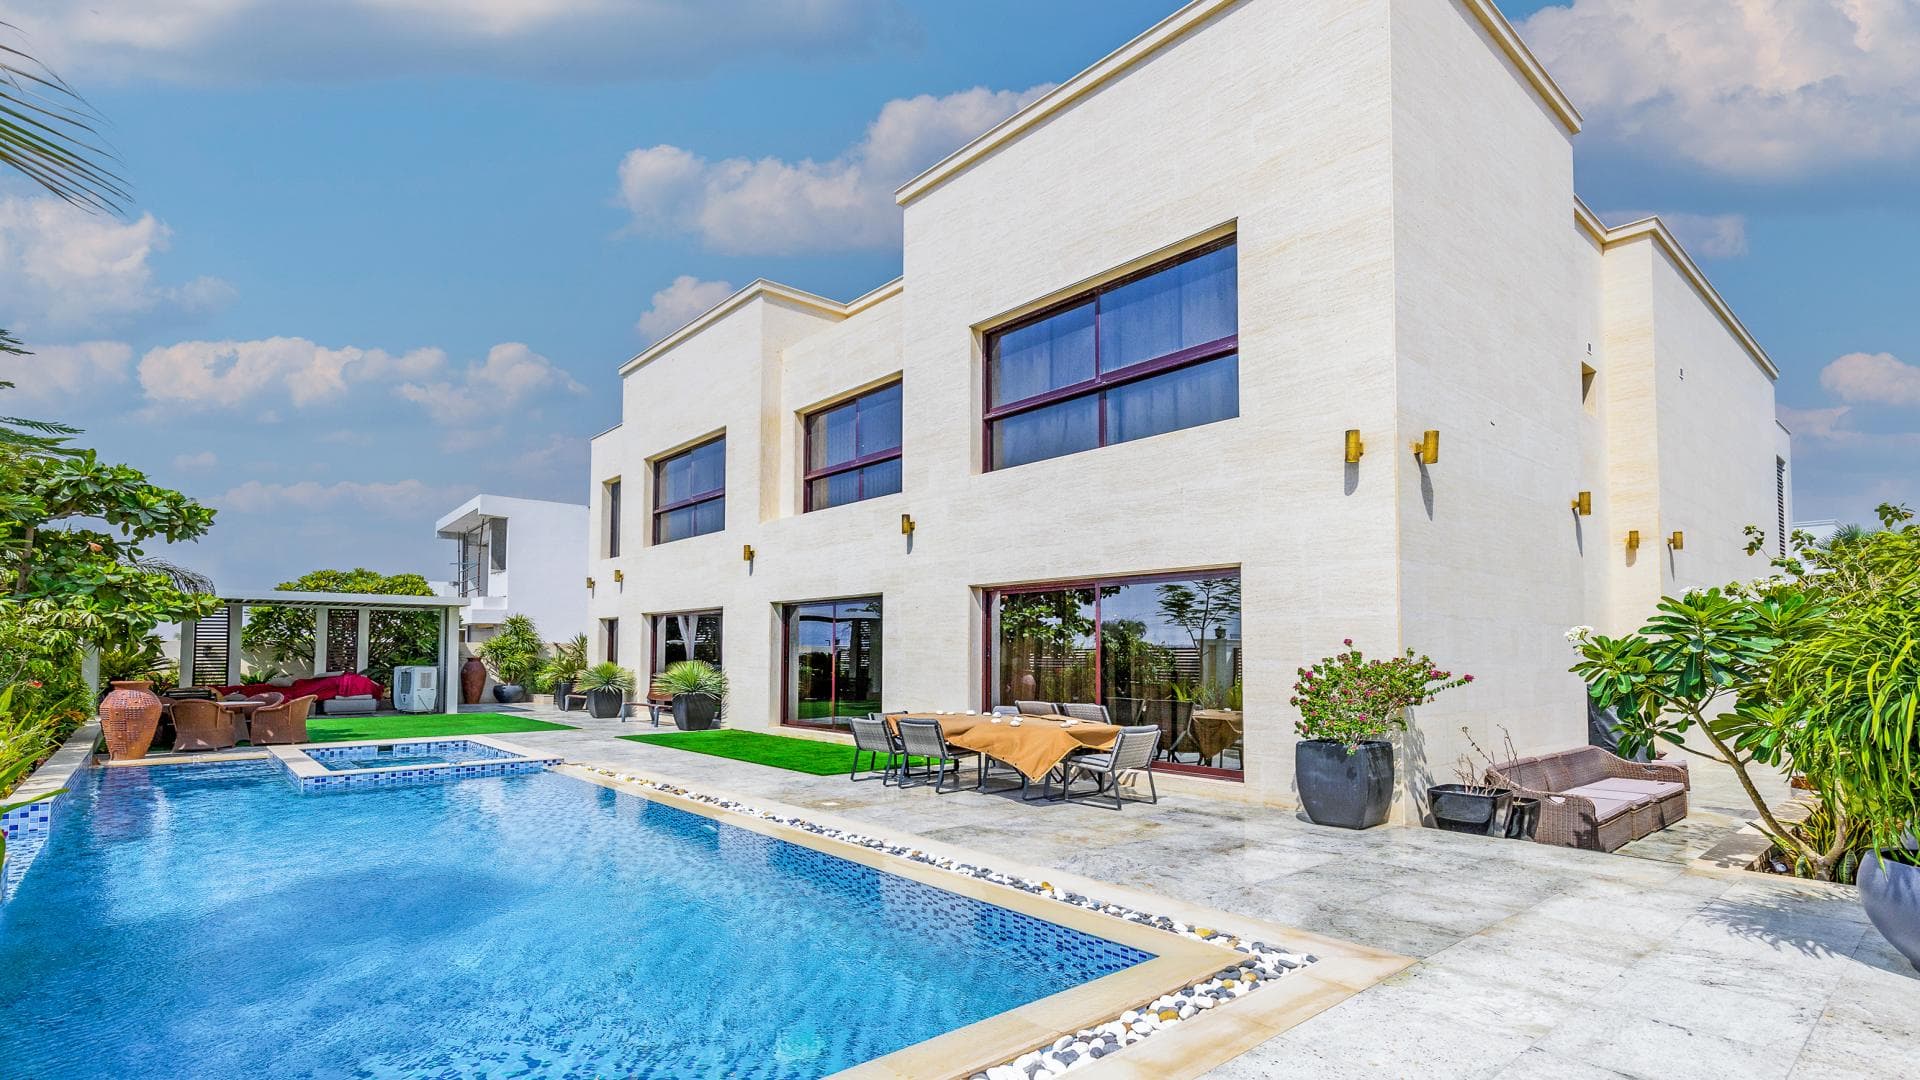 6 Bedroom Villa For Sale Dubai Hills Lp19372 2837dbeb58ee0600.jpg